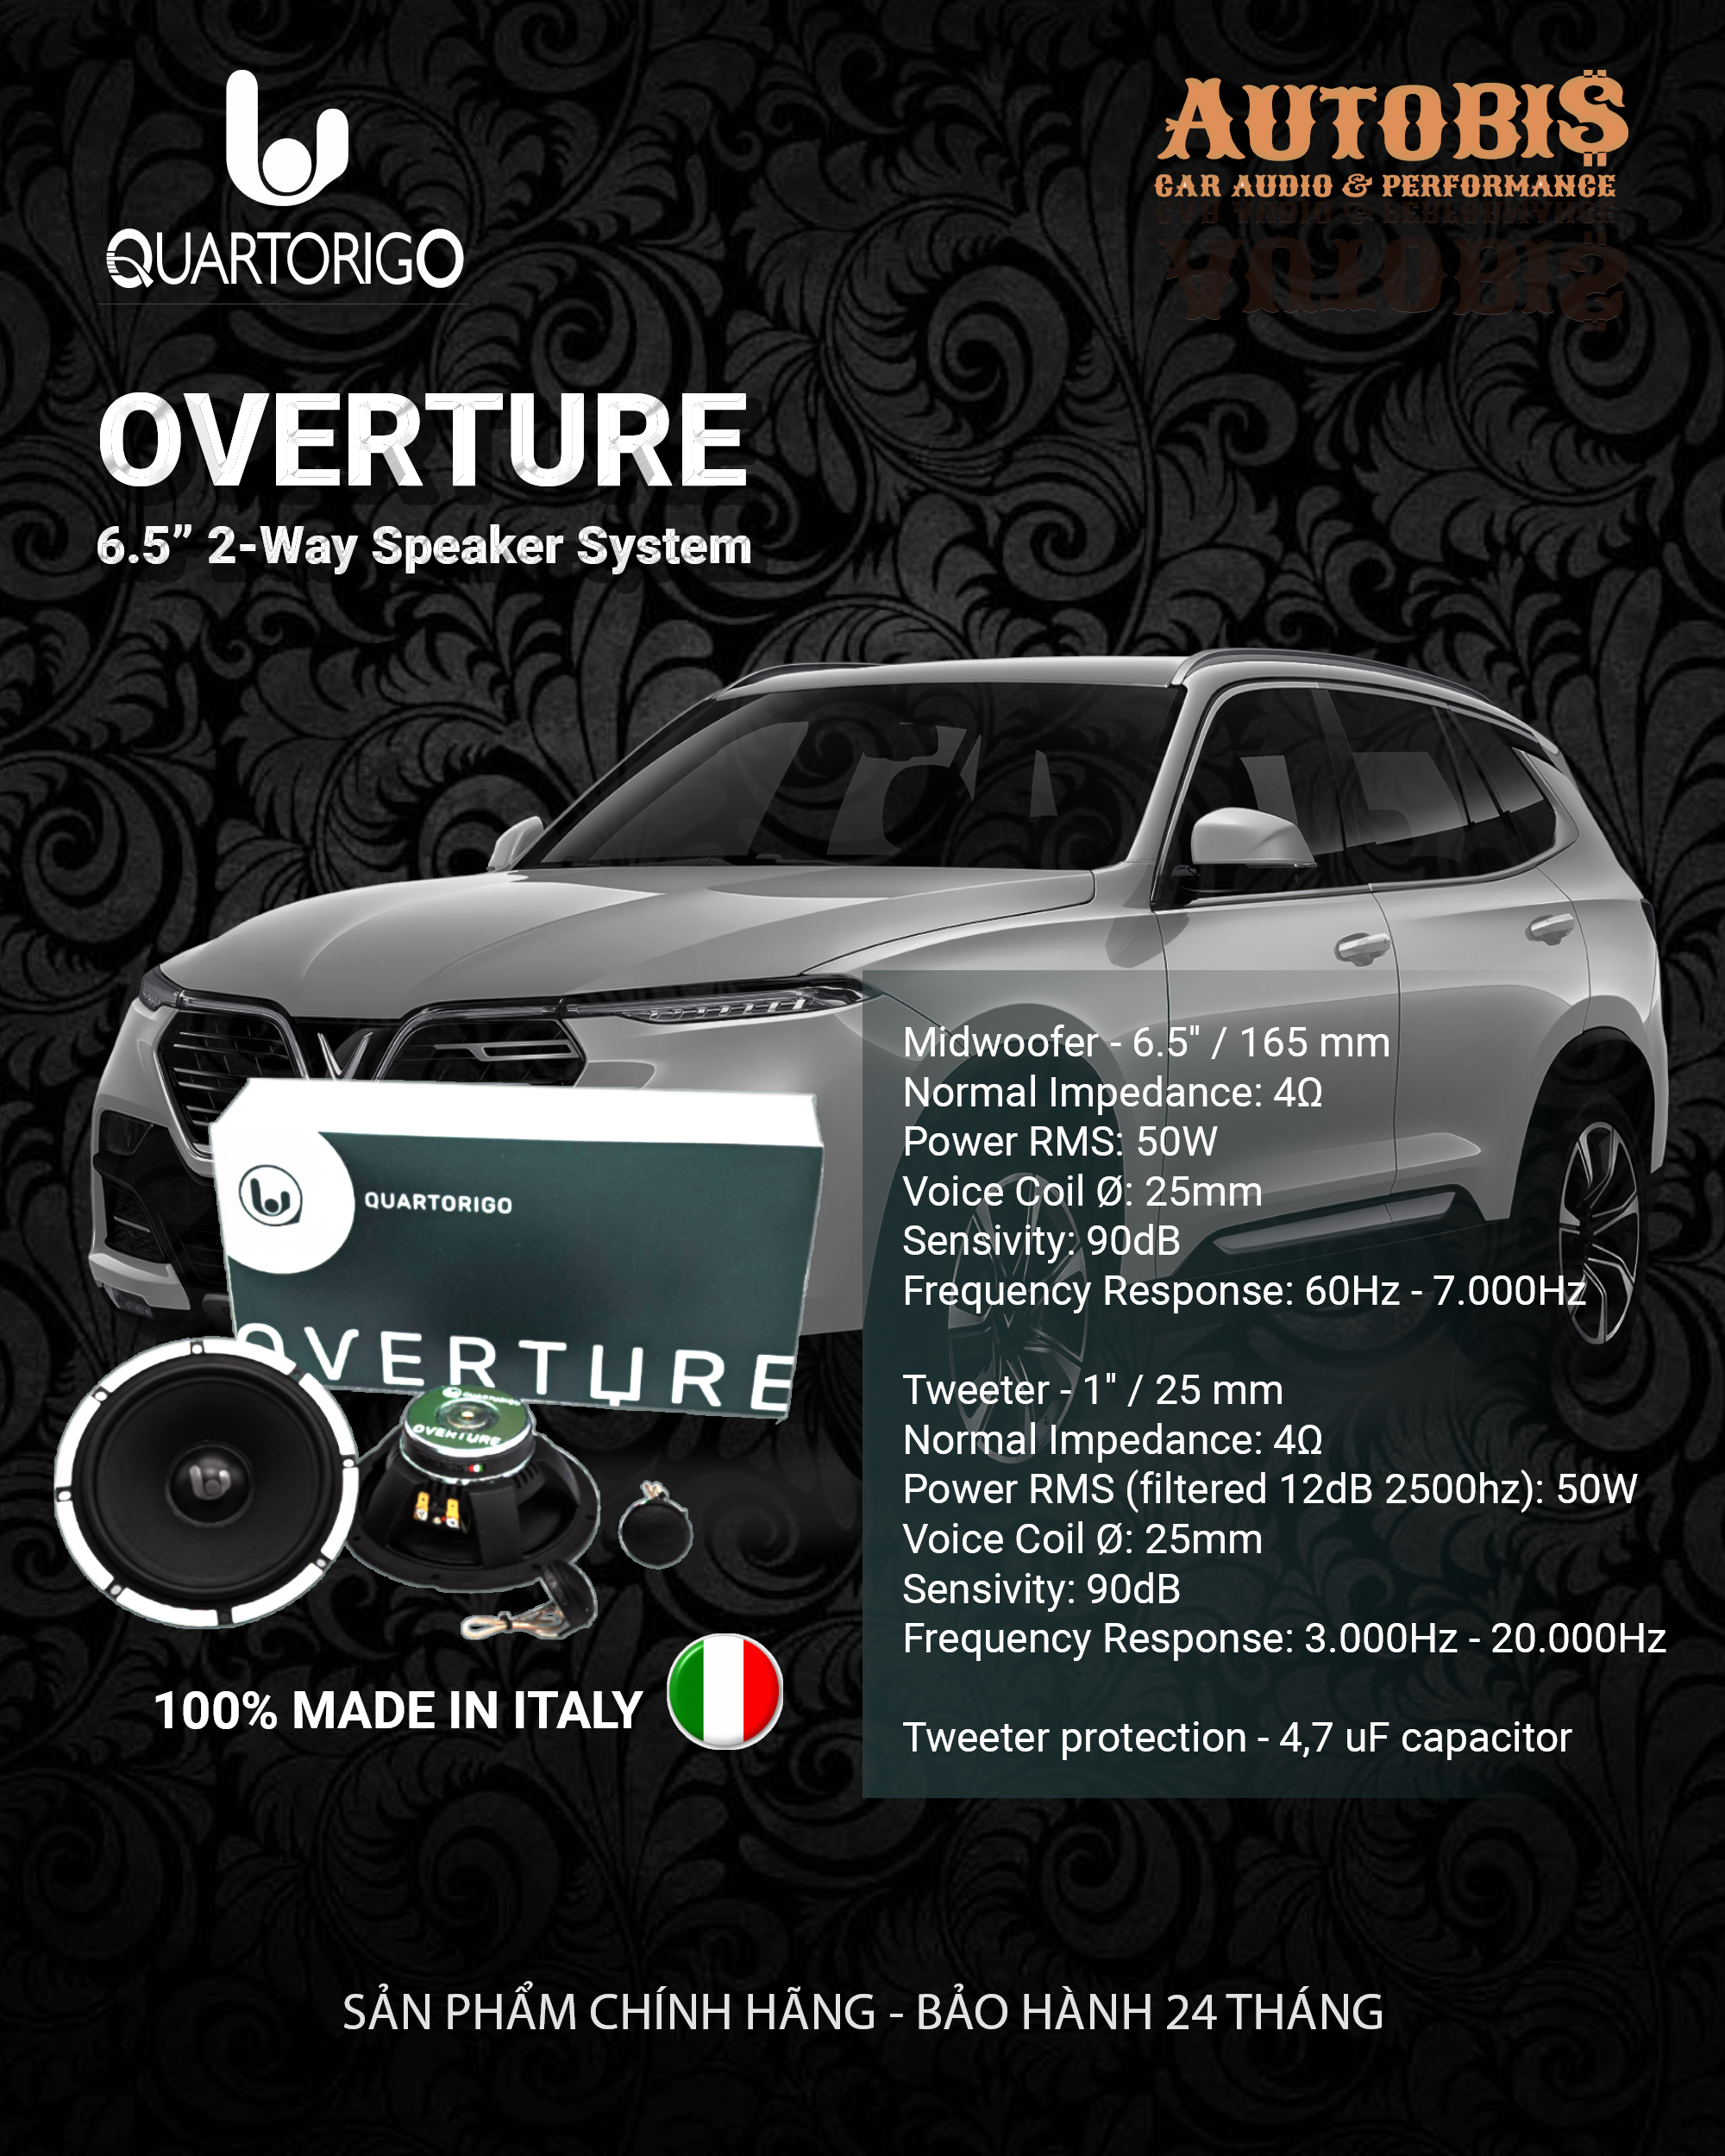 Nâng tầm trải nghiệm âm thanh khi nâng cấp Loa Quartorigo Overture trên  Honda CR-V | AUTOBIS - AmThanhXeHoi.com